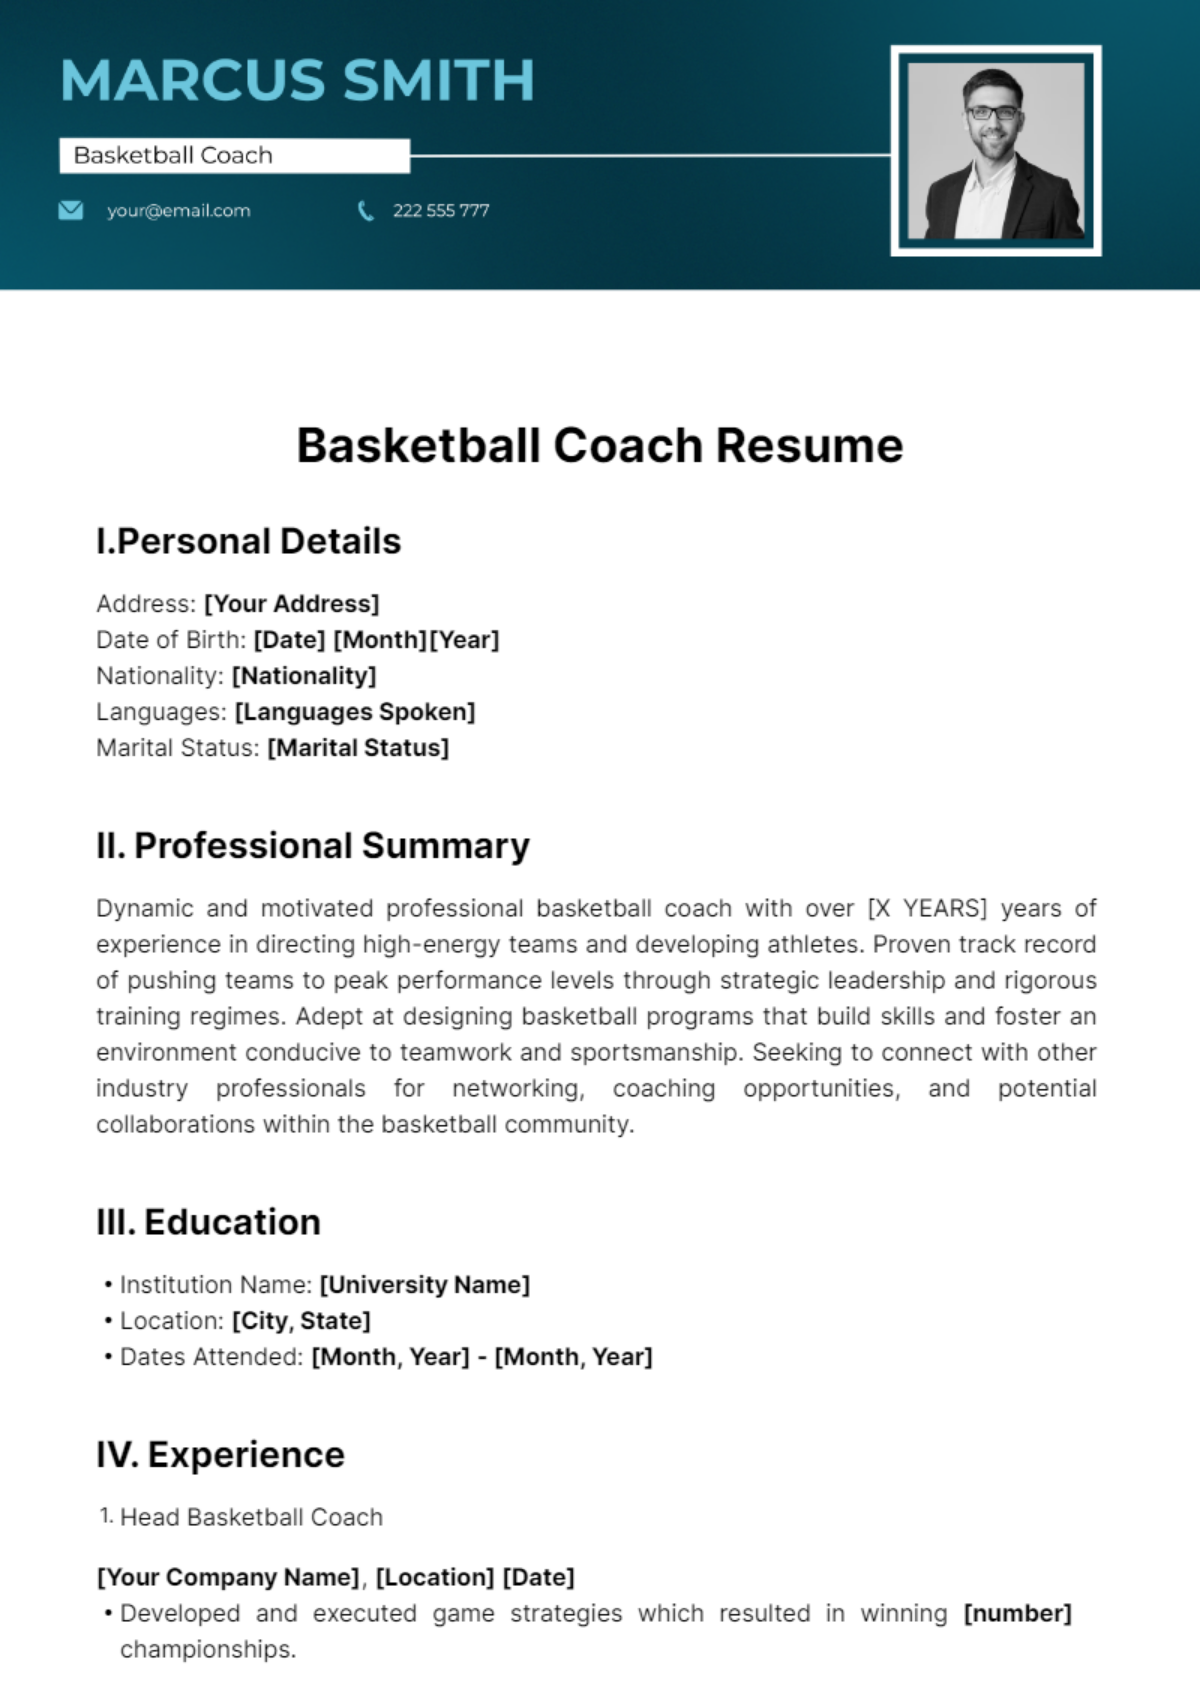 Basketball Coach Resume Template